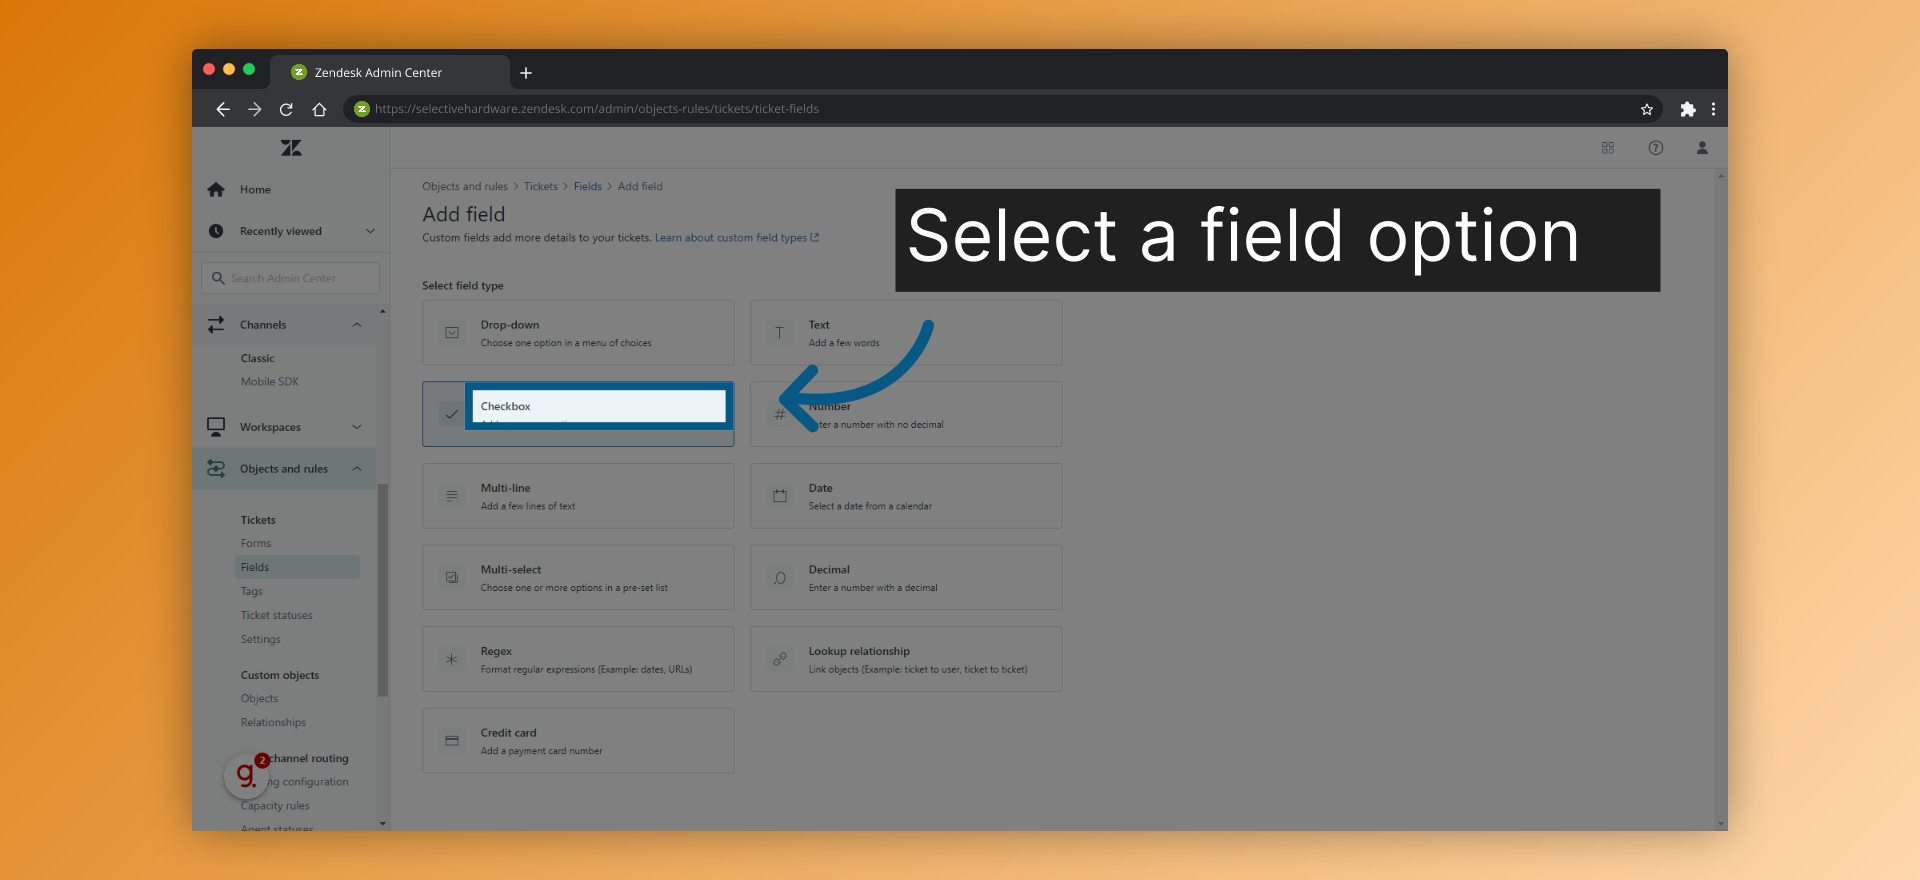 Select a field option